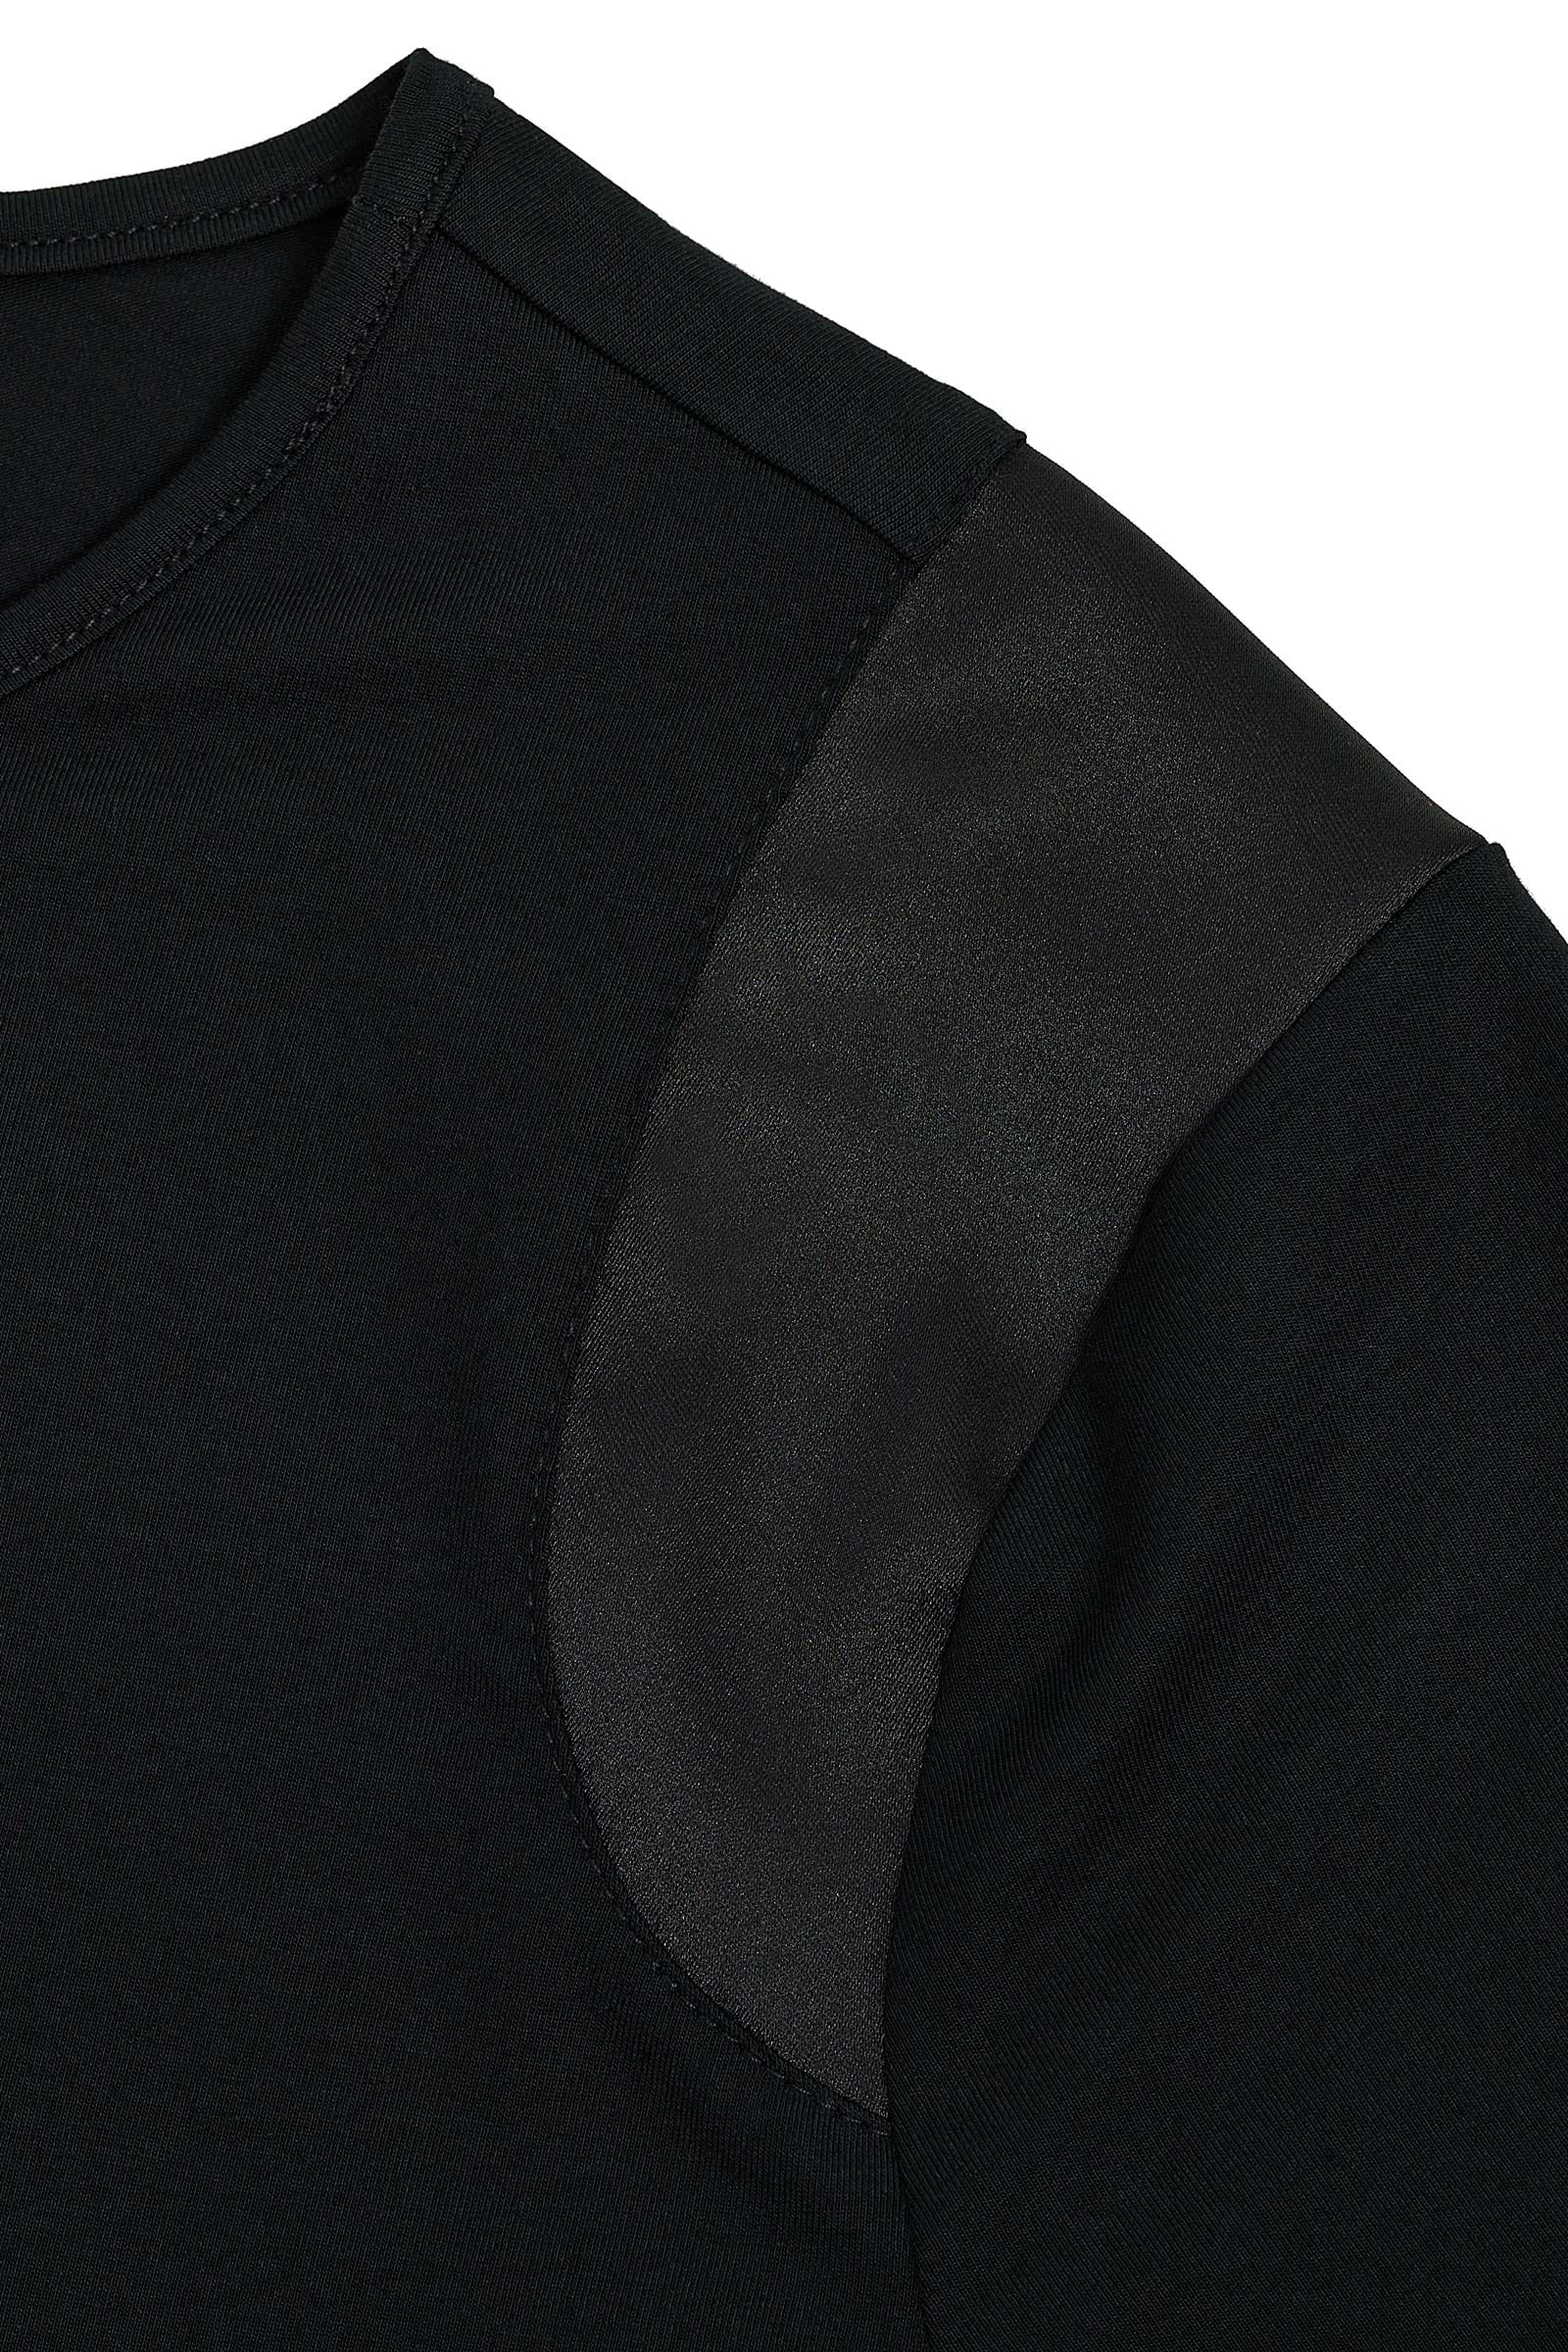 The Best Travel Top. Shoulder Details of a Carmella Top in Black.